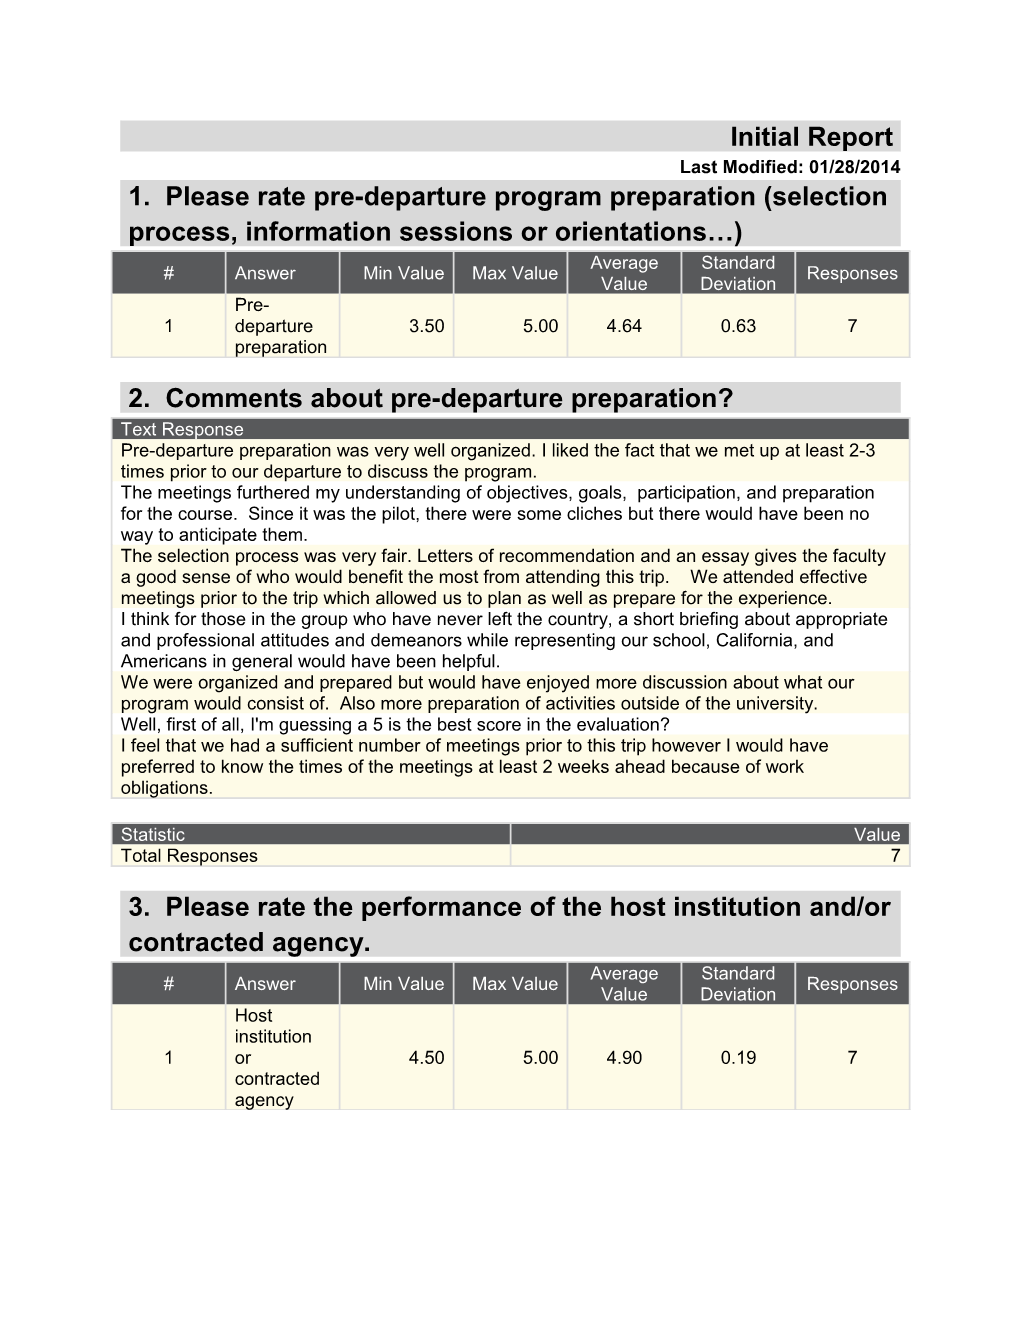 1. Please Rate Pre-Departure Program Preparation (Selection Process, Information Sessions